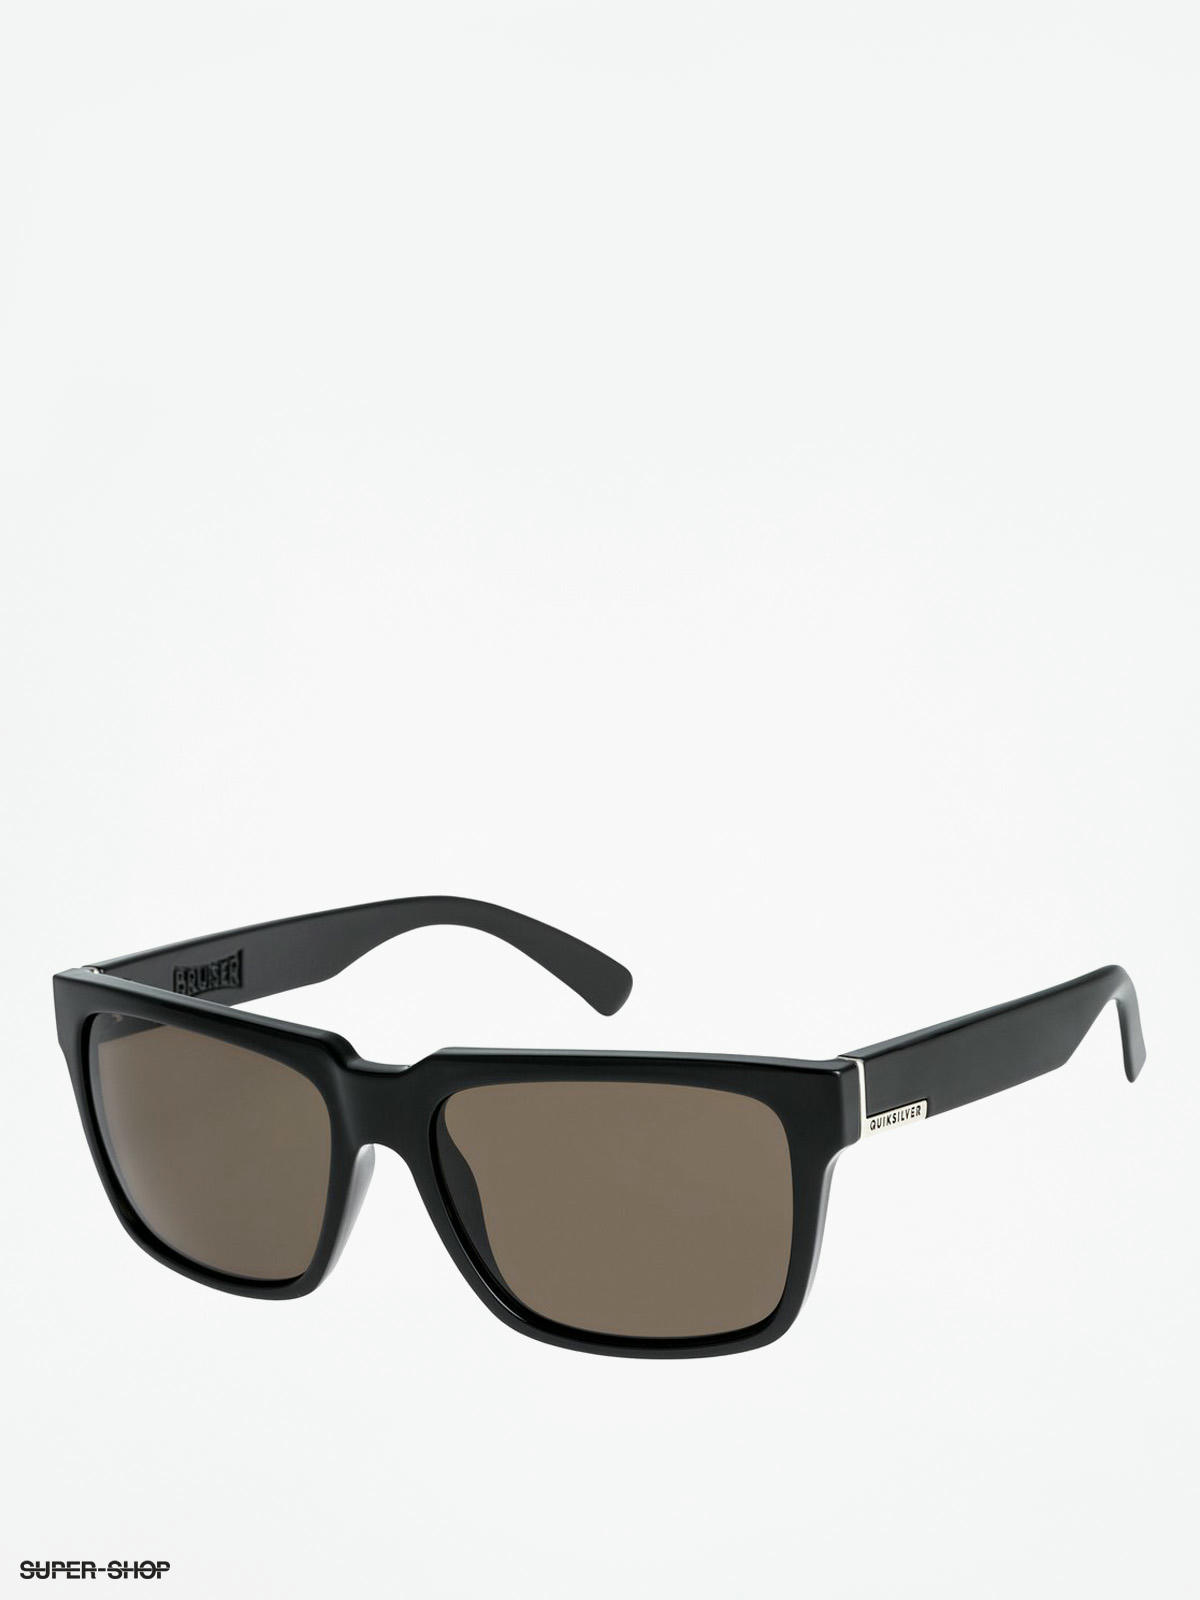 QUIKSILVER DINERO EQS1104/XKKB UV cat. 3 Sunglasses Shades Glasses Eyewear  - New | eBay